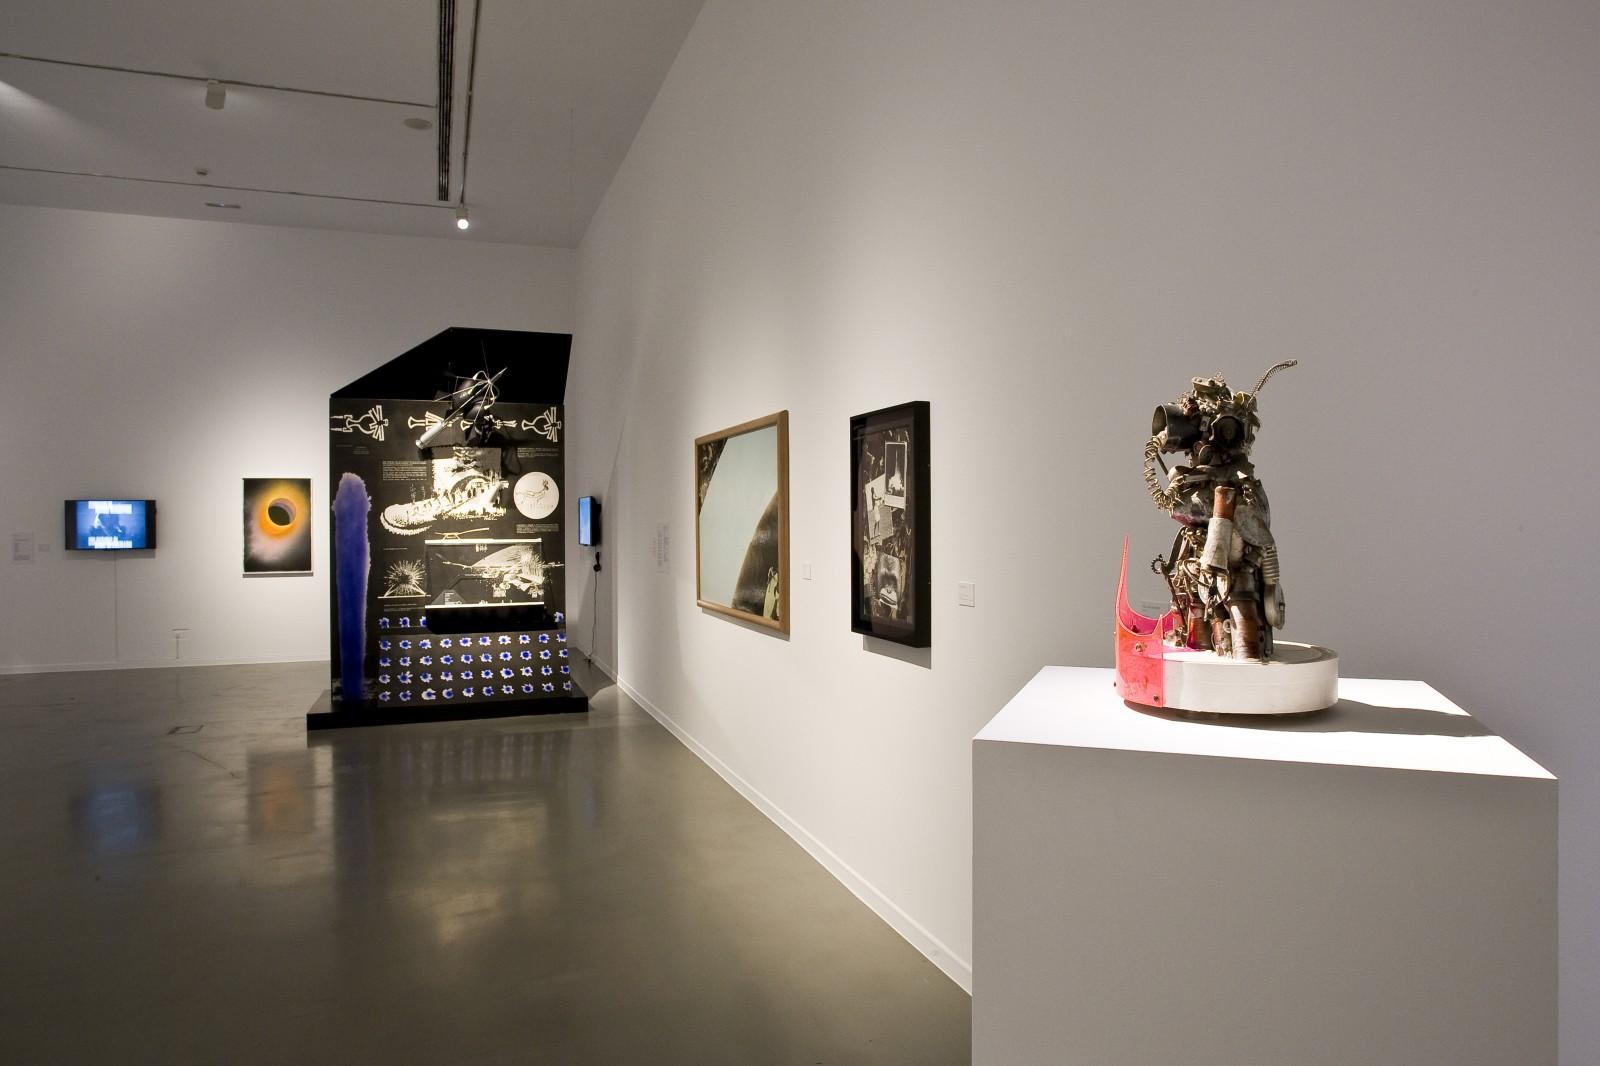 View of the exhibition "Ars'tronomy", La Casa Encendida, 2015